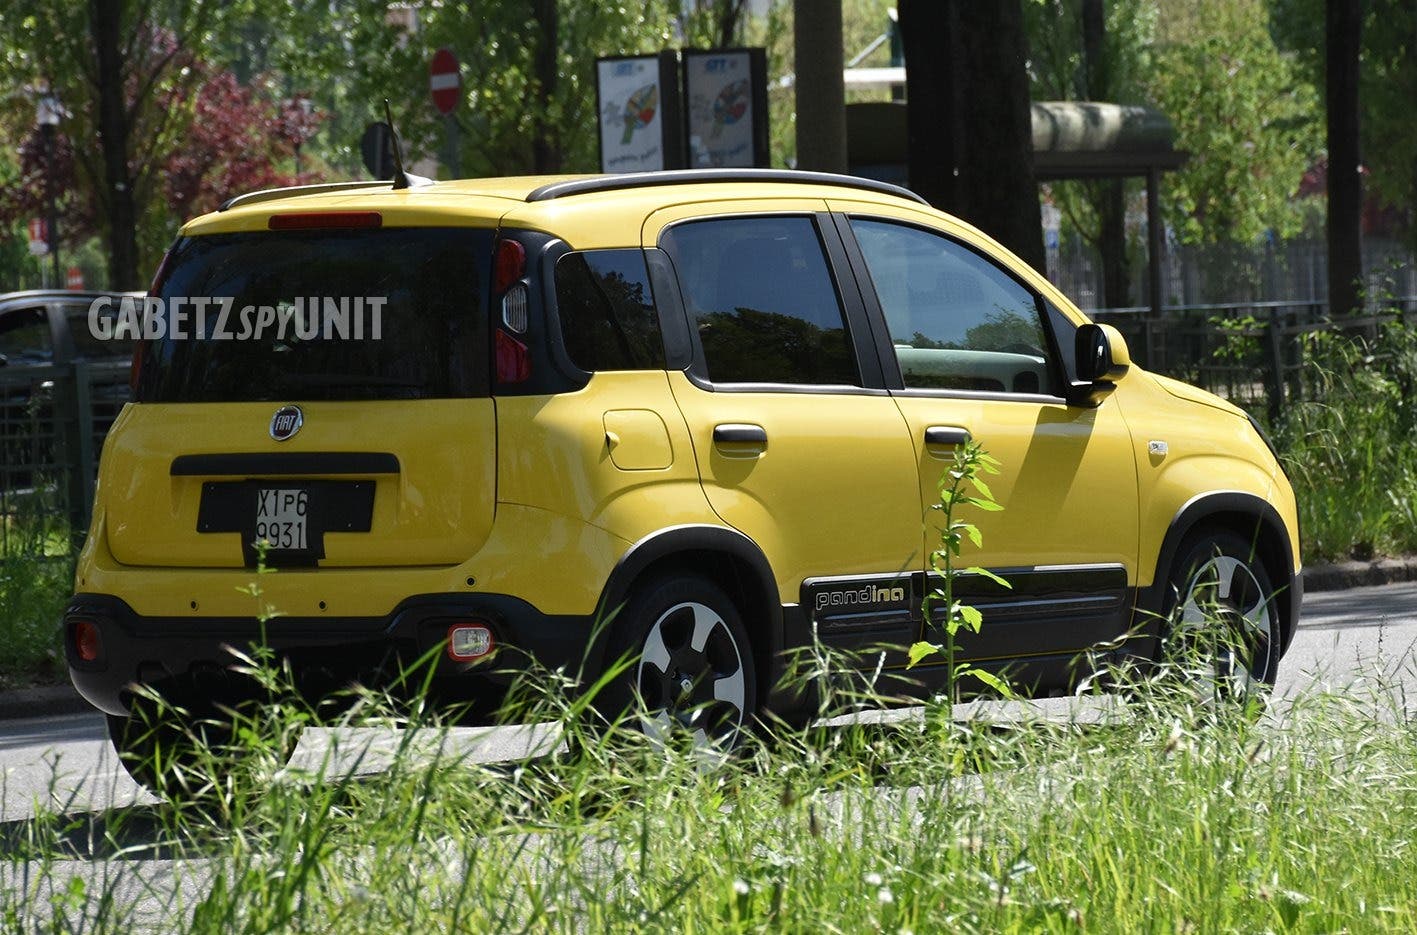 New Fiat Pandina shows off vibrant new look